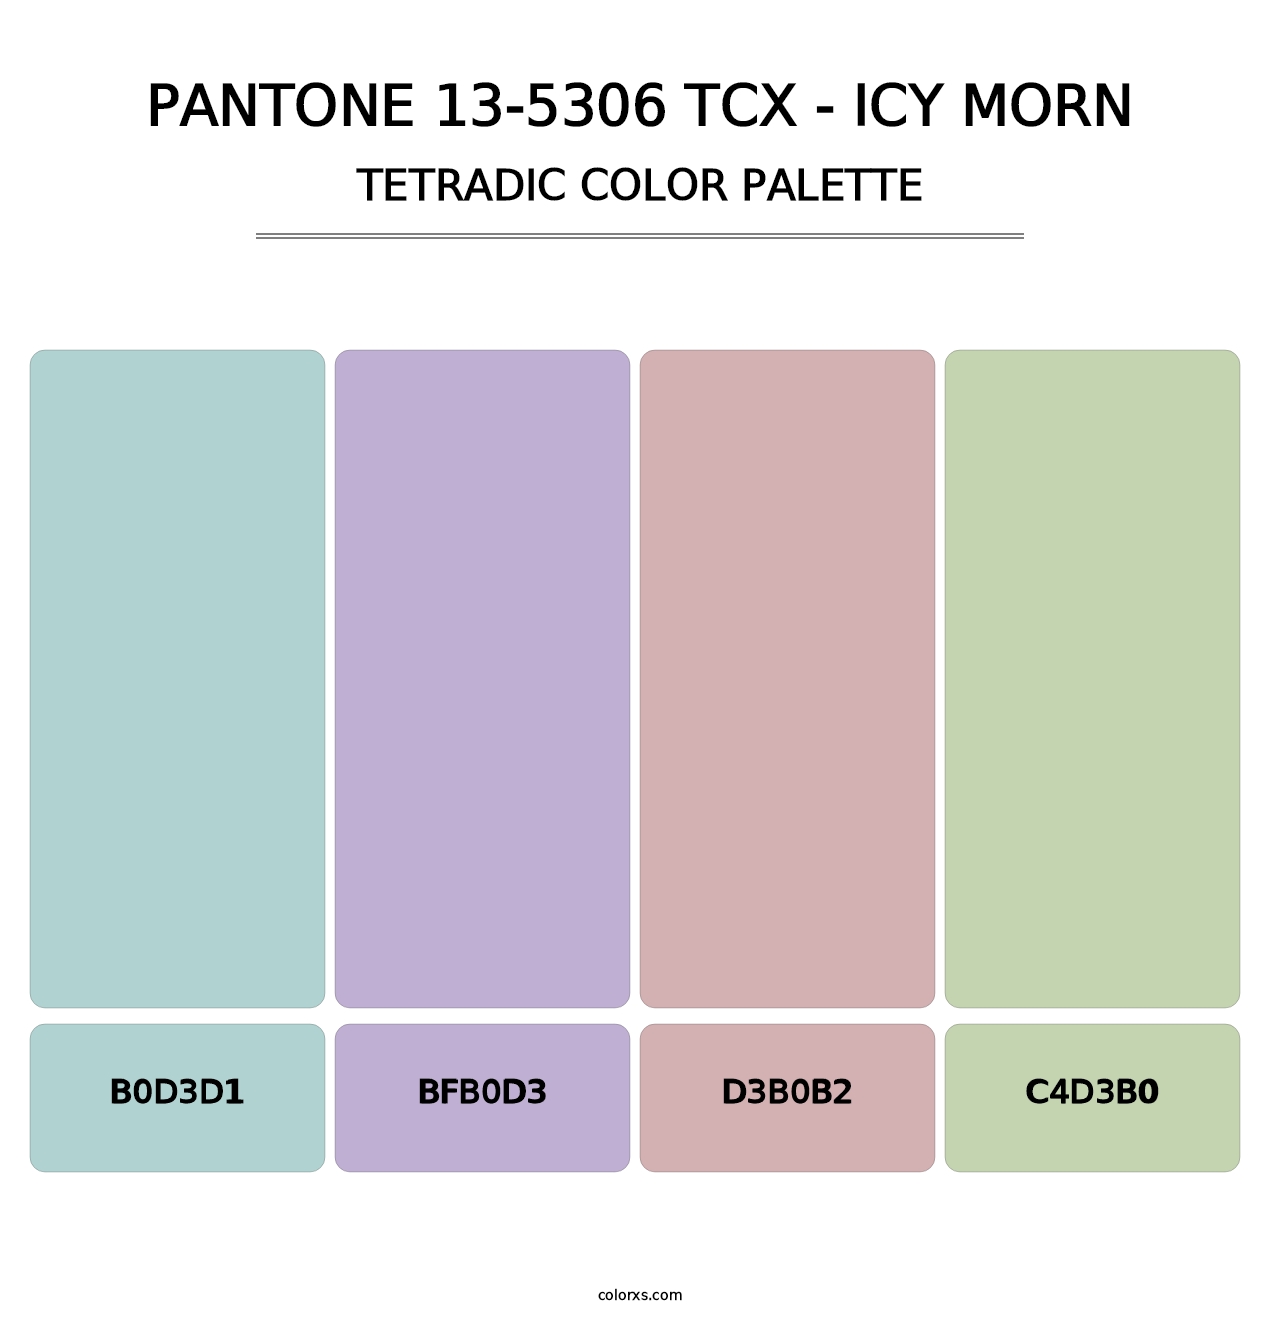 PANTONE 13-5306 TCX - Icy Morn - Tetradic Color Palette